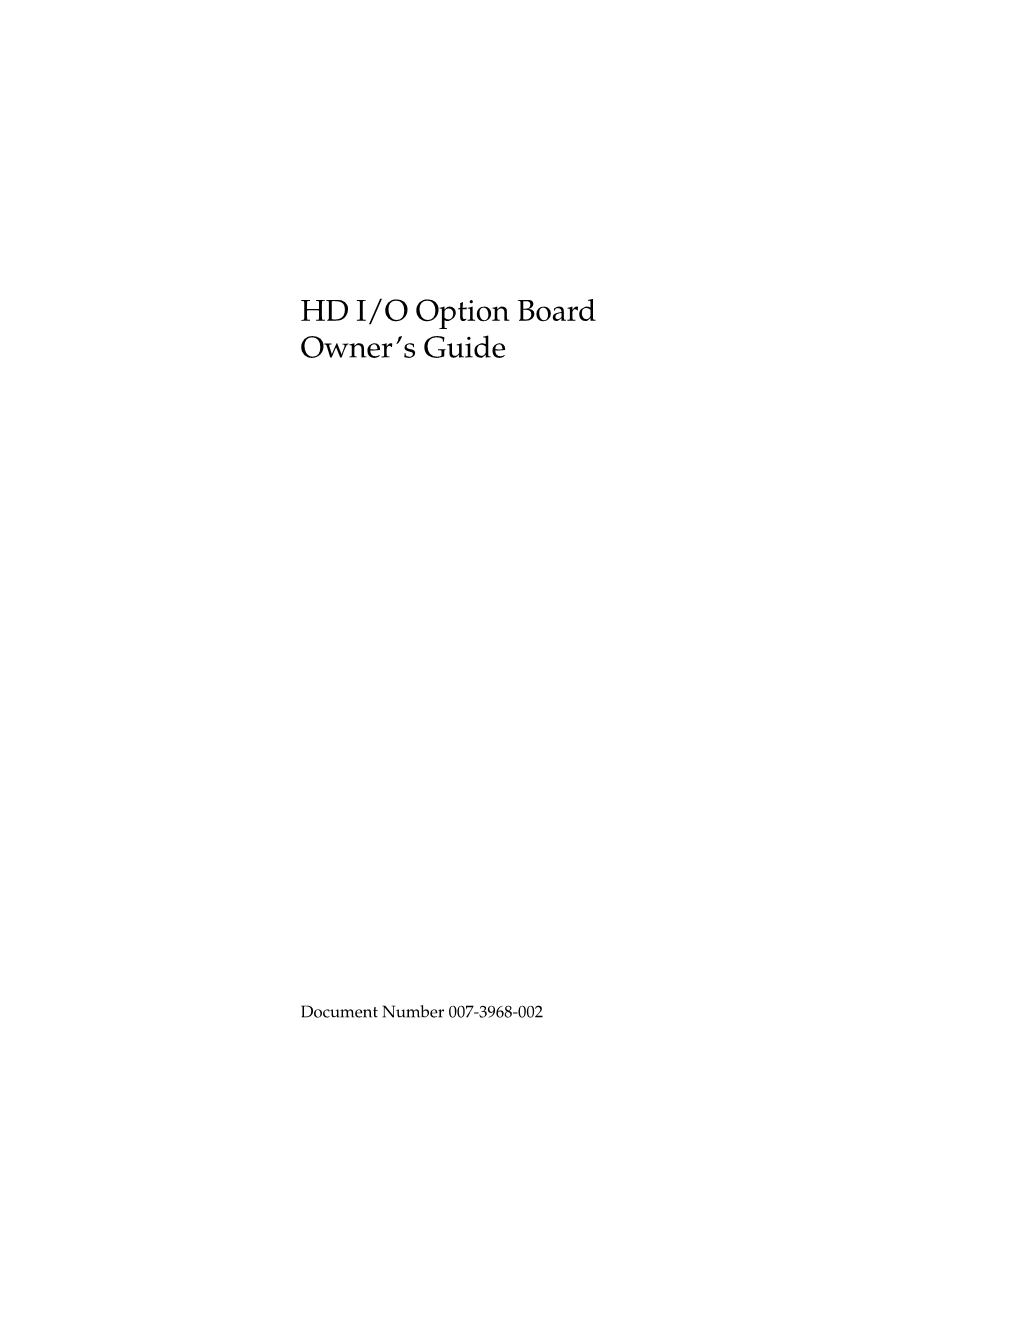 HD I/O Option Board Owner's Guide